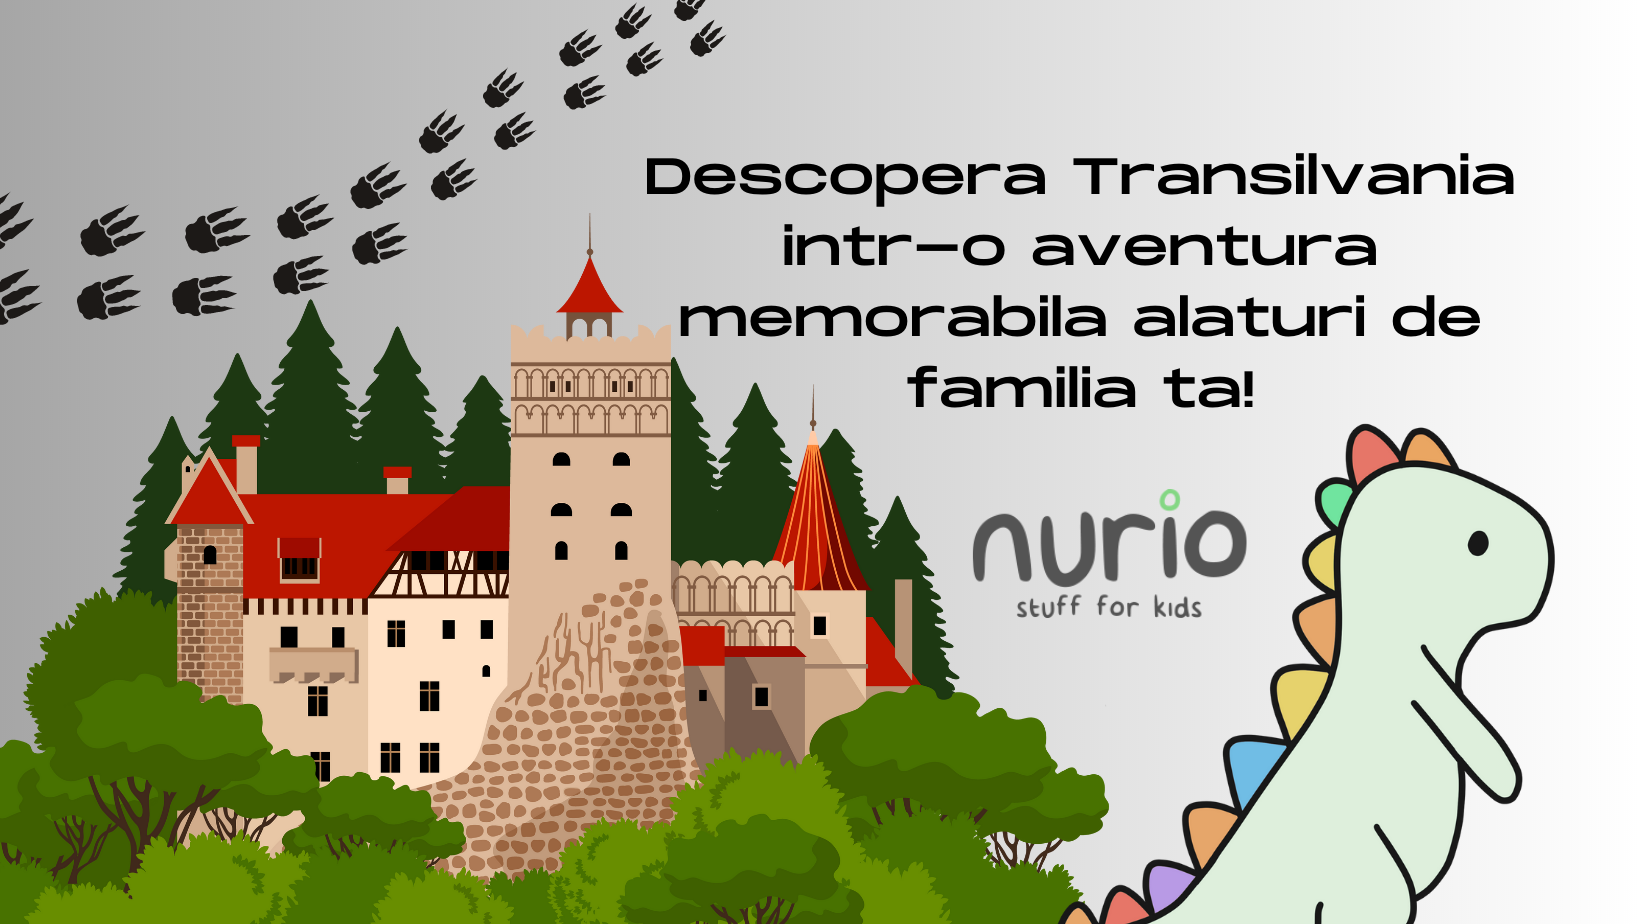 Descopera Transilvania intr-o aventura memorabila alaturi de familia ta!